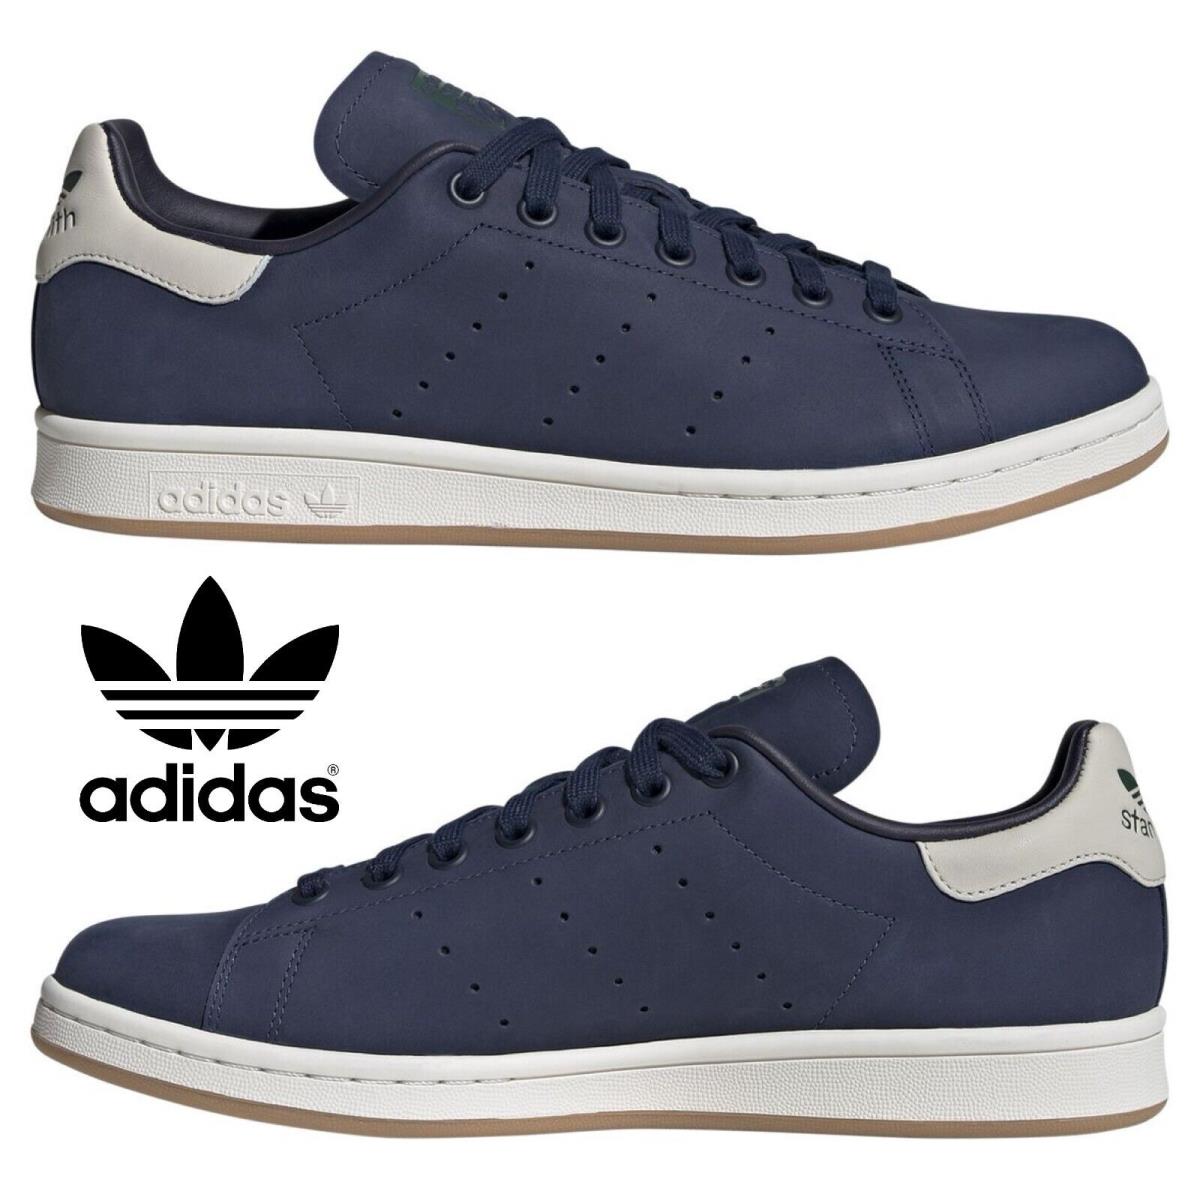 Adidas Originals Stan Smith Men`s Sneakers Comfort Sport Casual Shoes Blue - Blue, Manufacturer: Night Indigo/Alumina/Collegiate Green